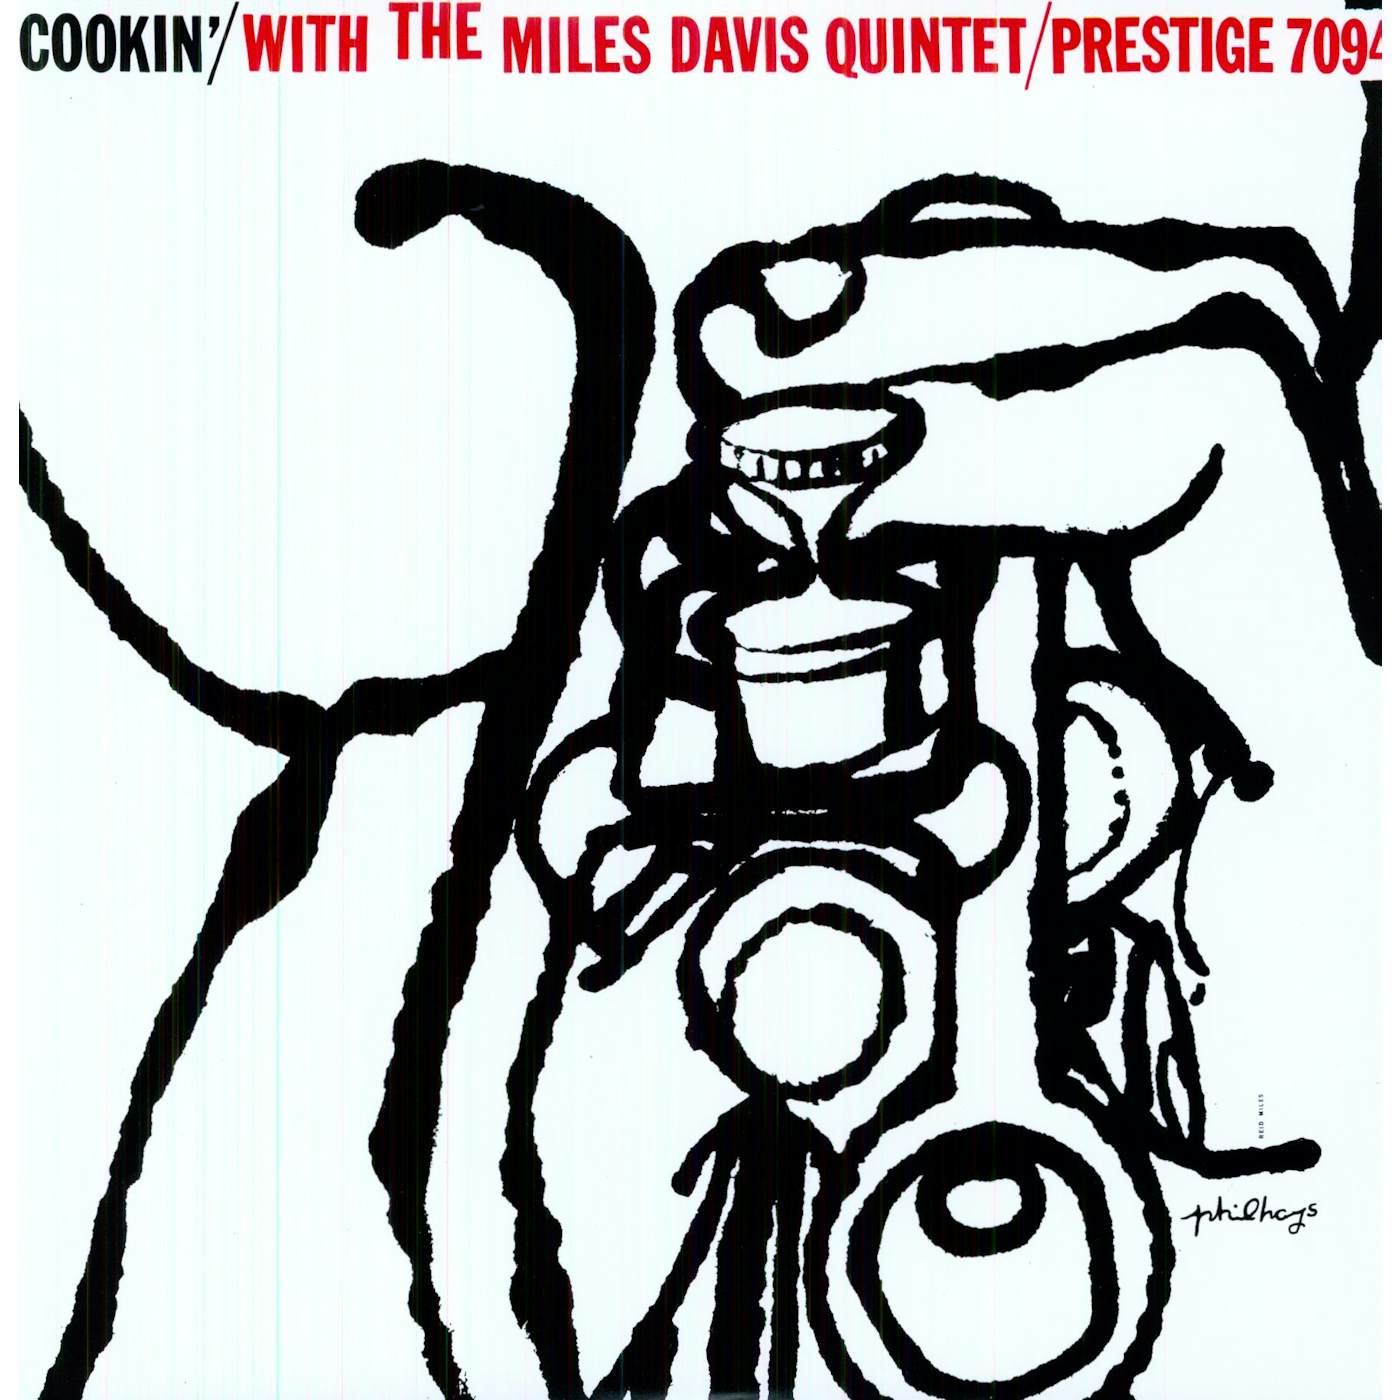 COOKIN WITH THE MILES DAVIS QUINTET Vinyl Record